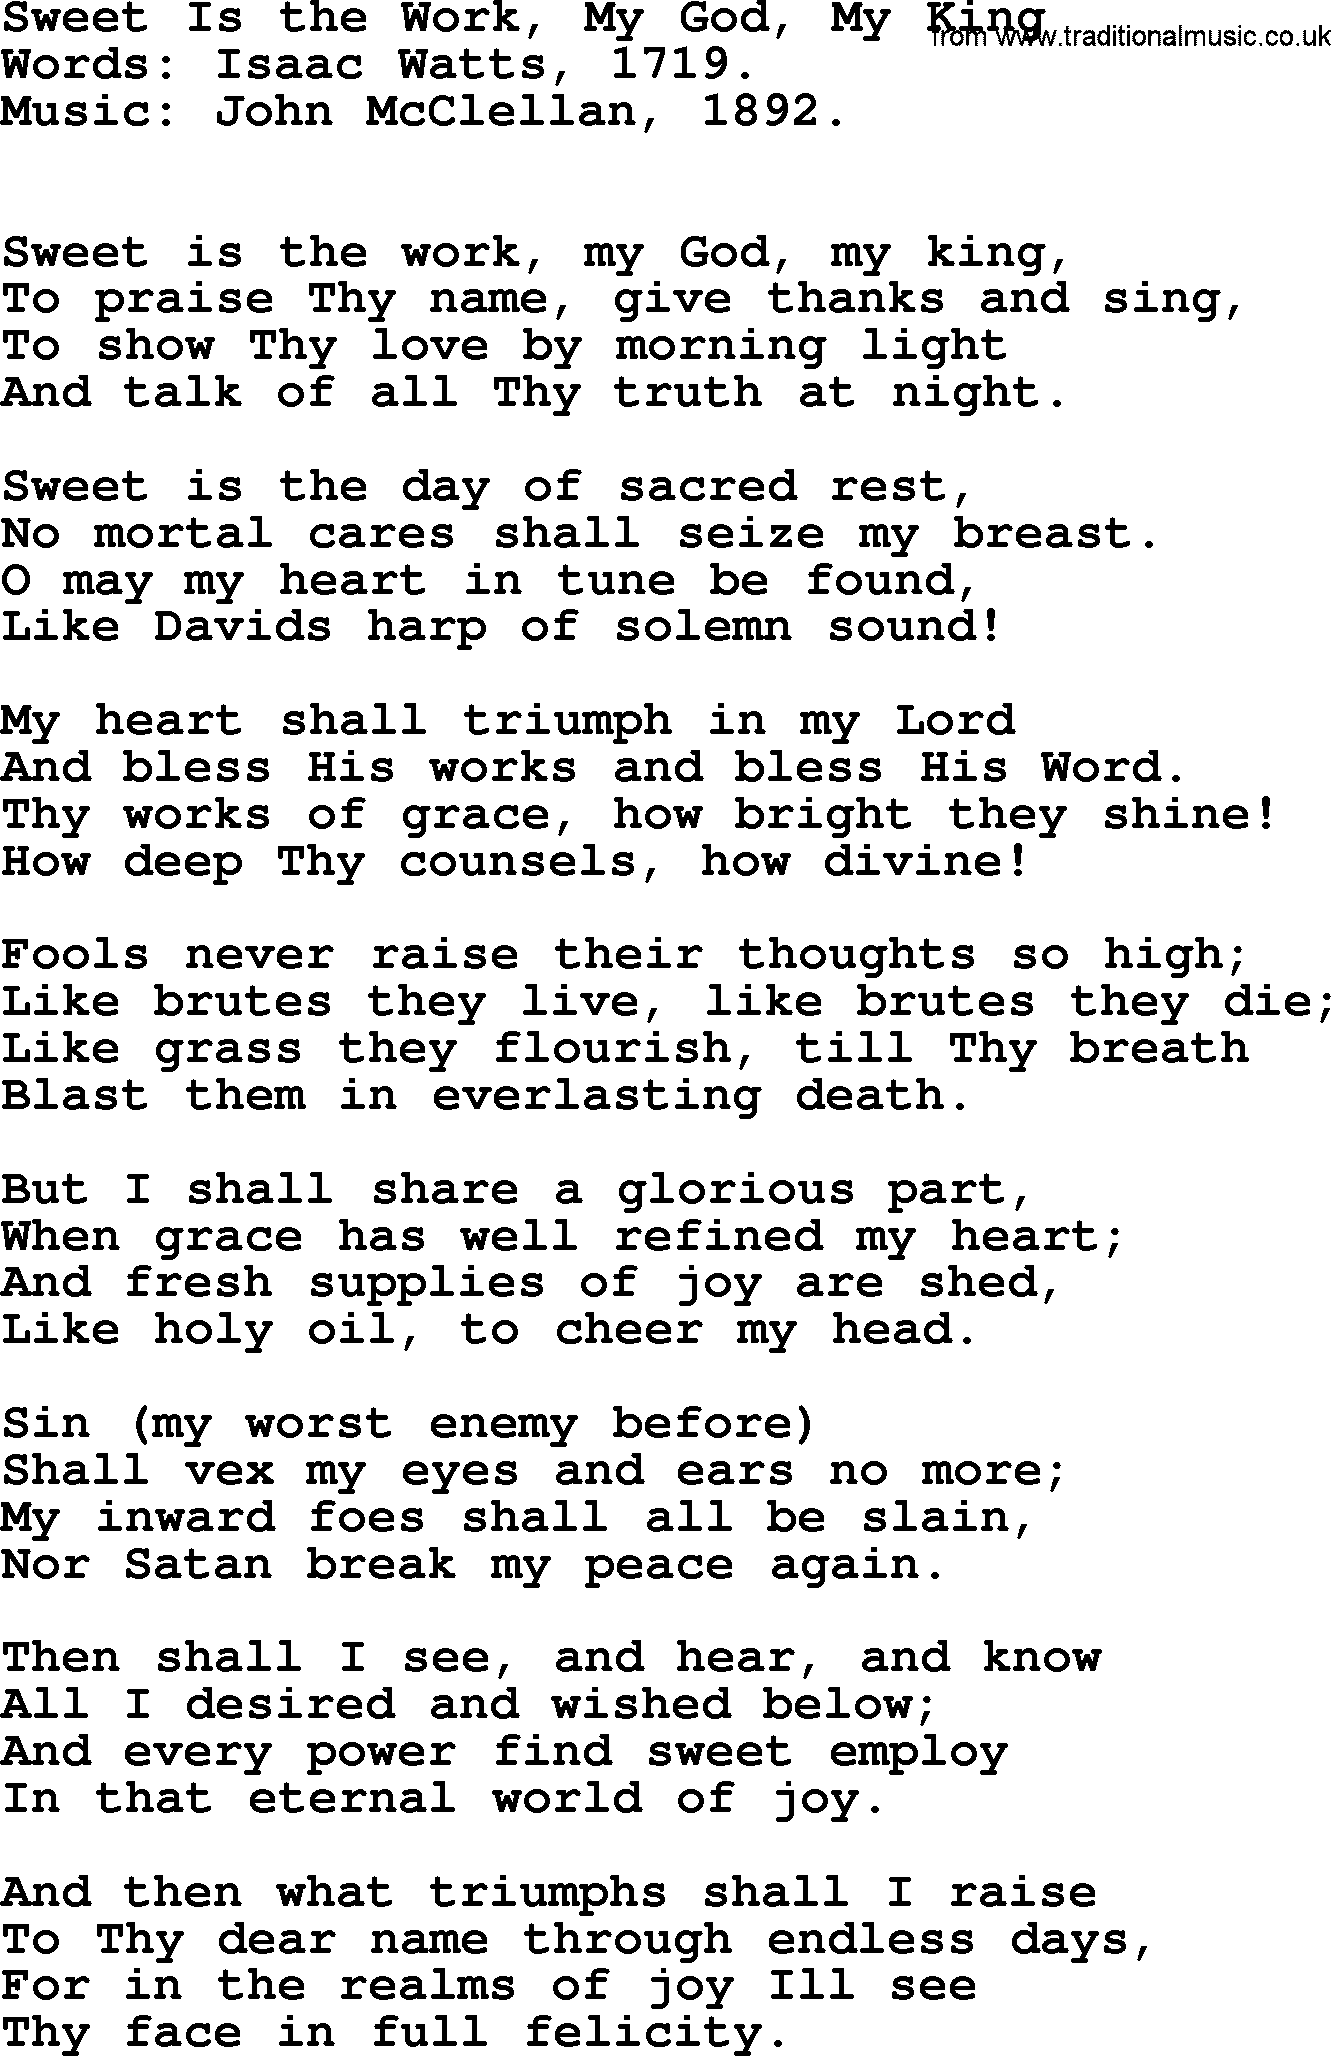 Isaac Watts Christian hymn: Sweet Is the Work, My God, My King- lyricss